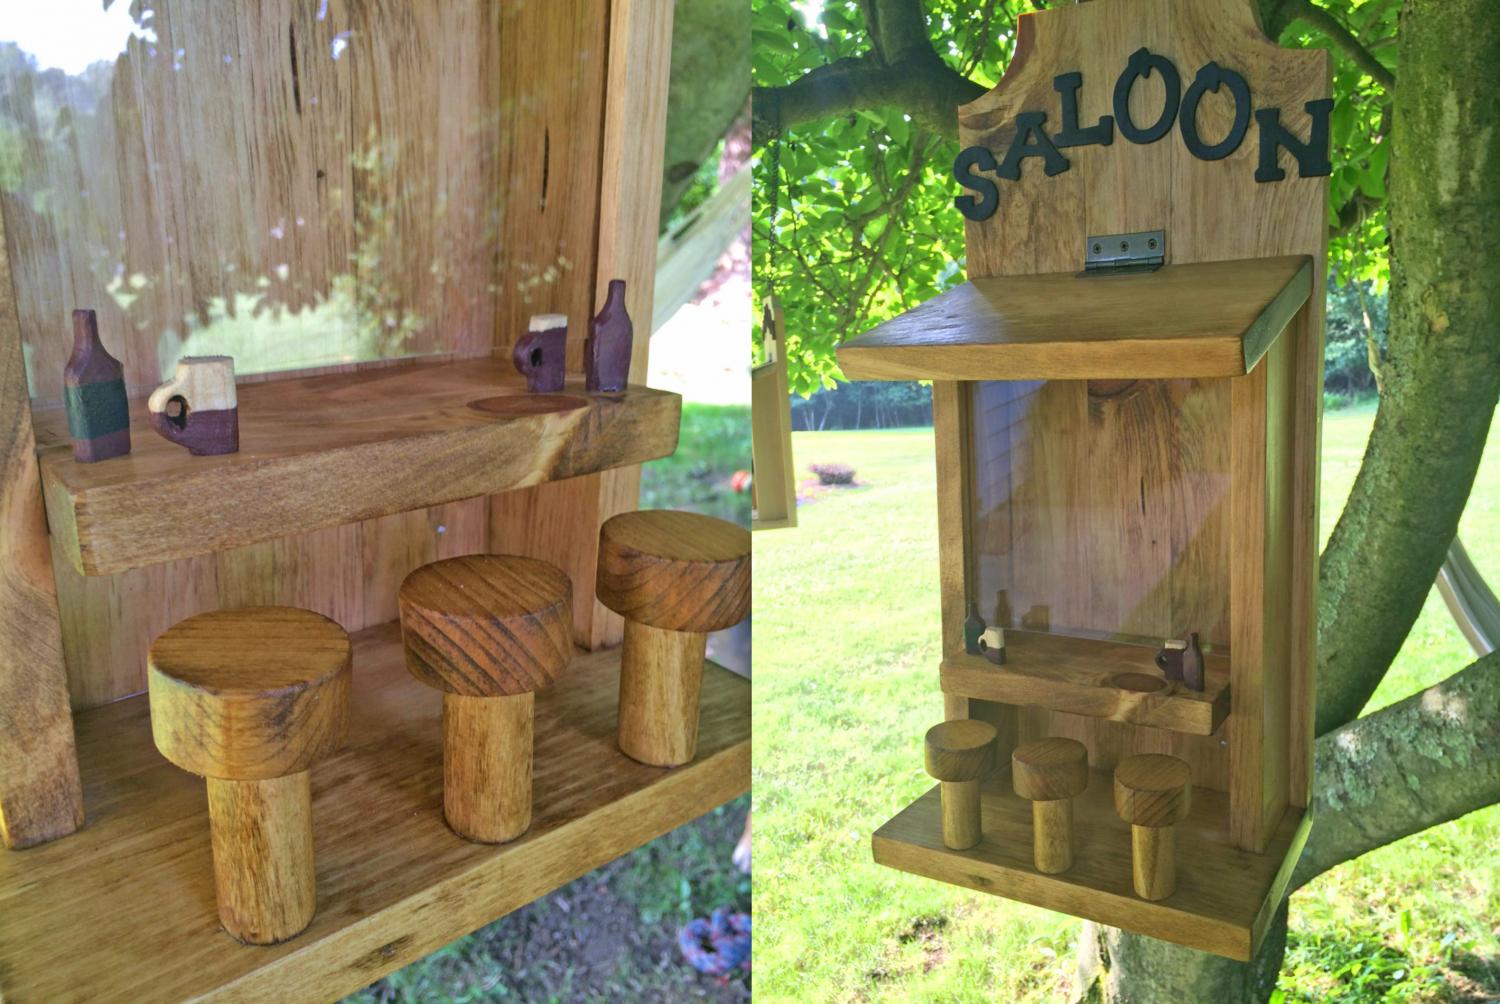 Squirrel Saloon - Wooden Saloon squirrel feeder with bar stools